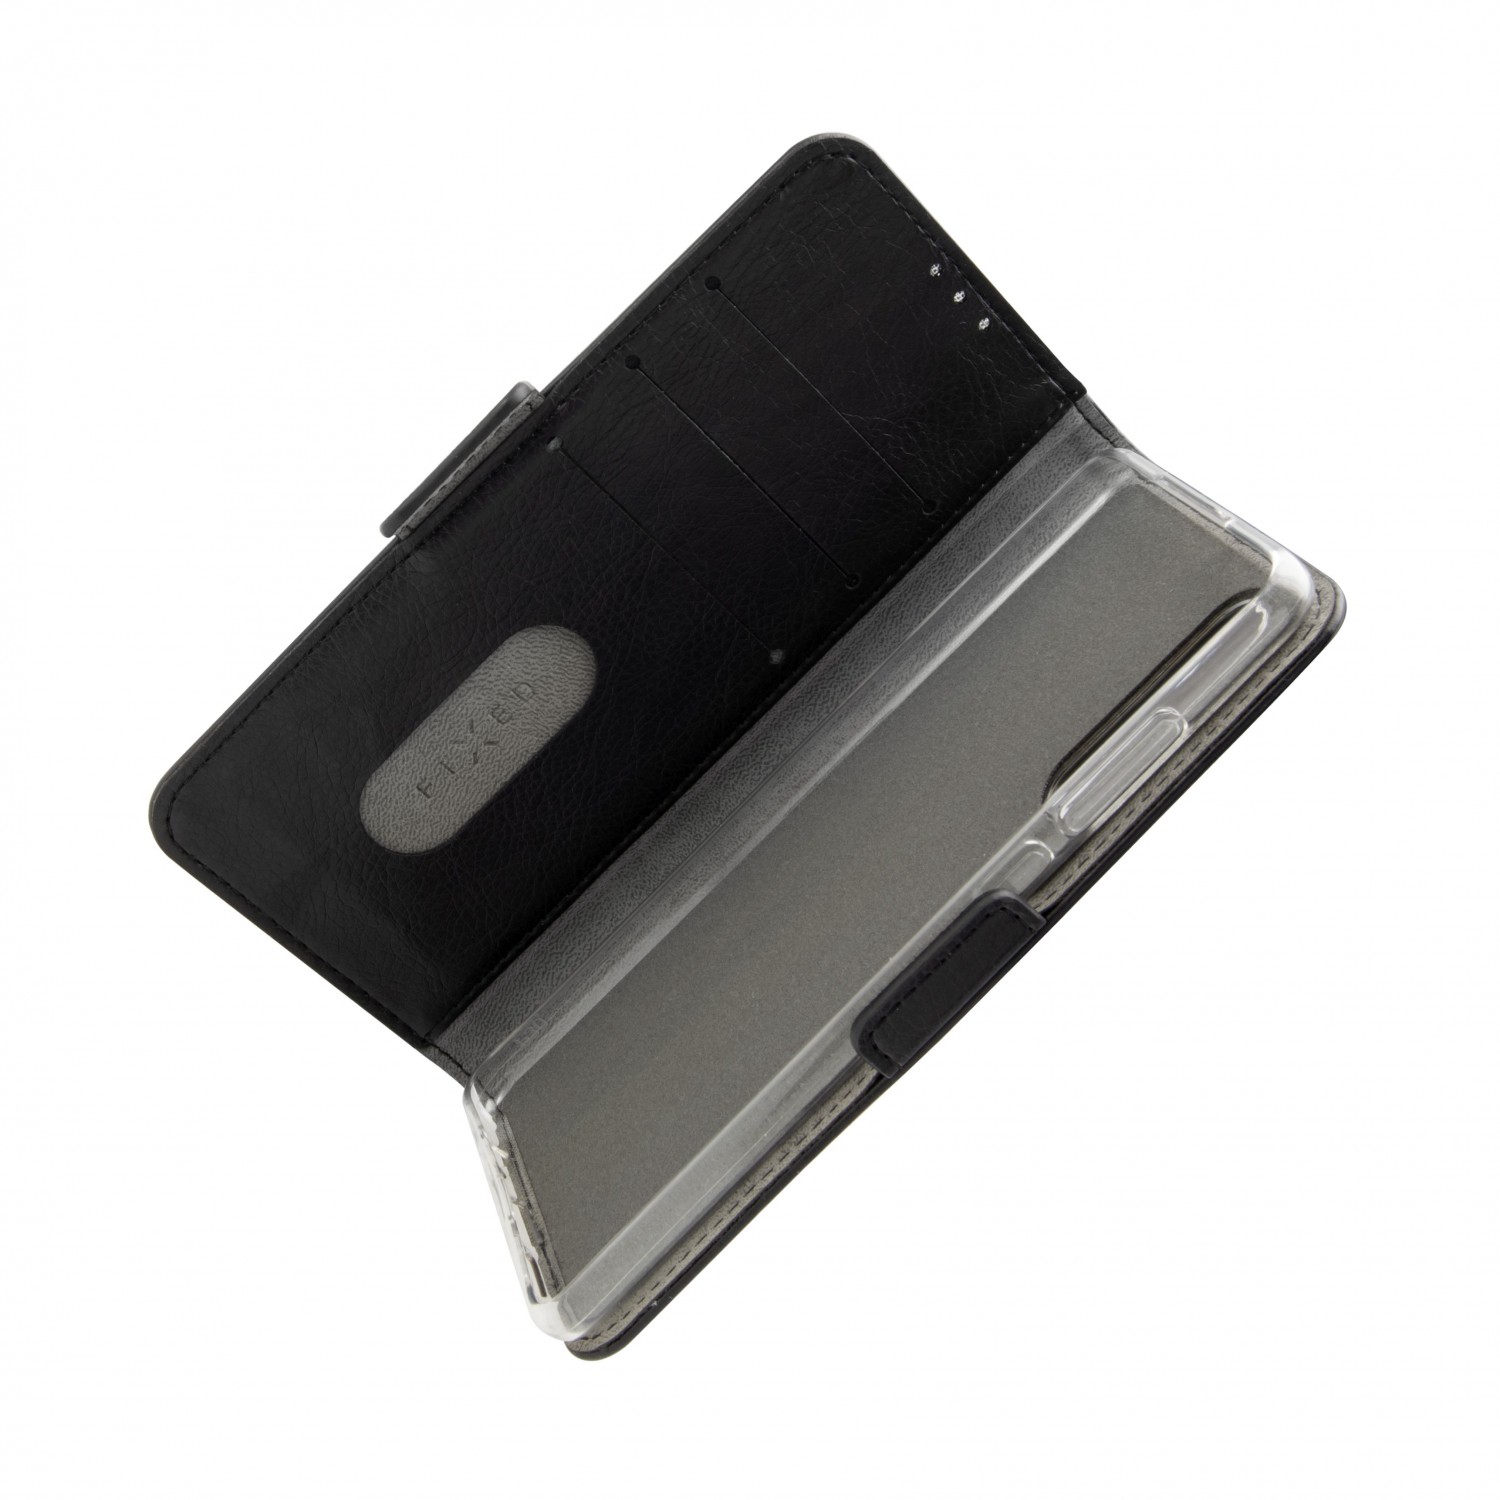 Flipové pouzdro FIXED Opus New Edition pro ASUS Zenfone 7 Pro, black